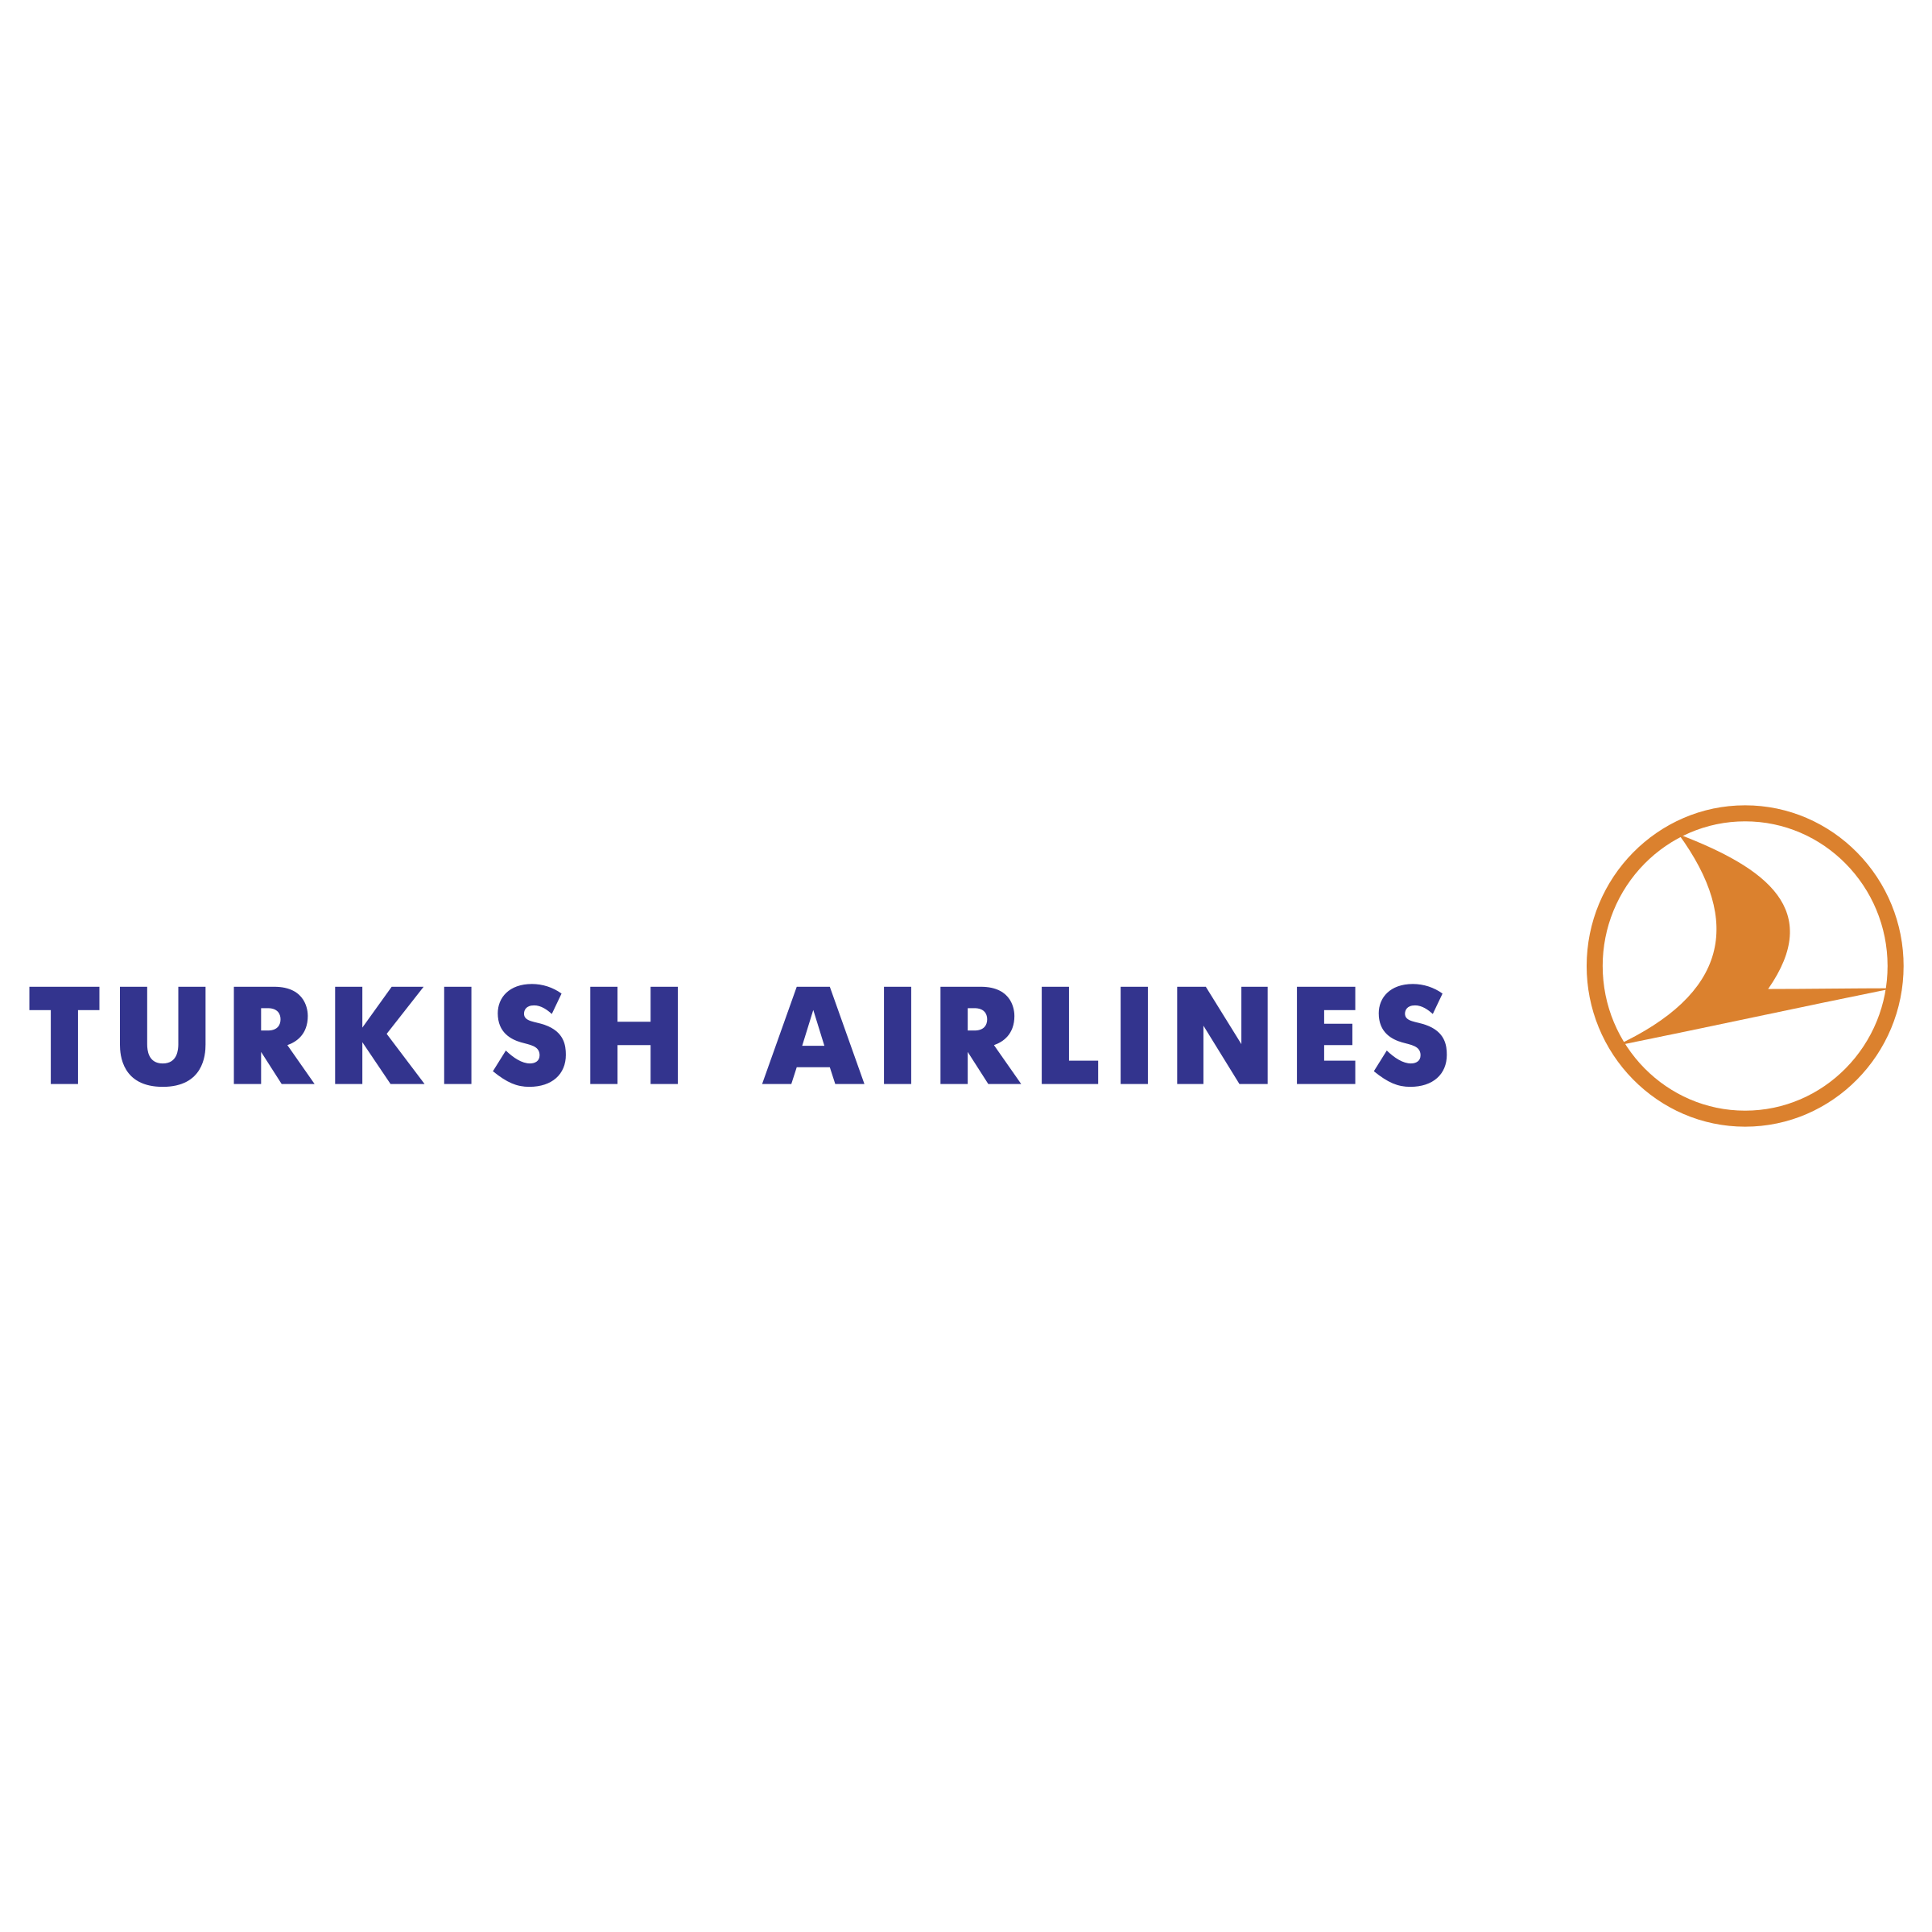 Turkish Airlines Logo - Turkish Airlines Logo PNG Transparent & SVG Vector